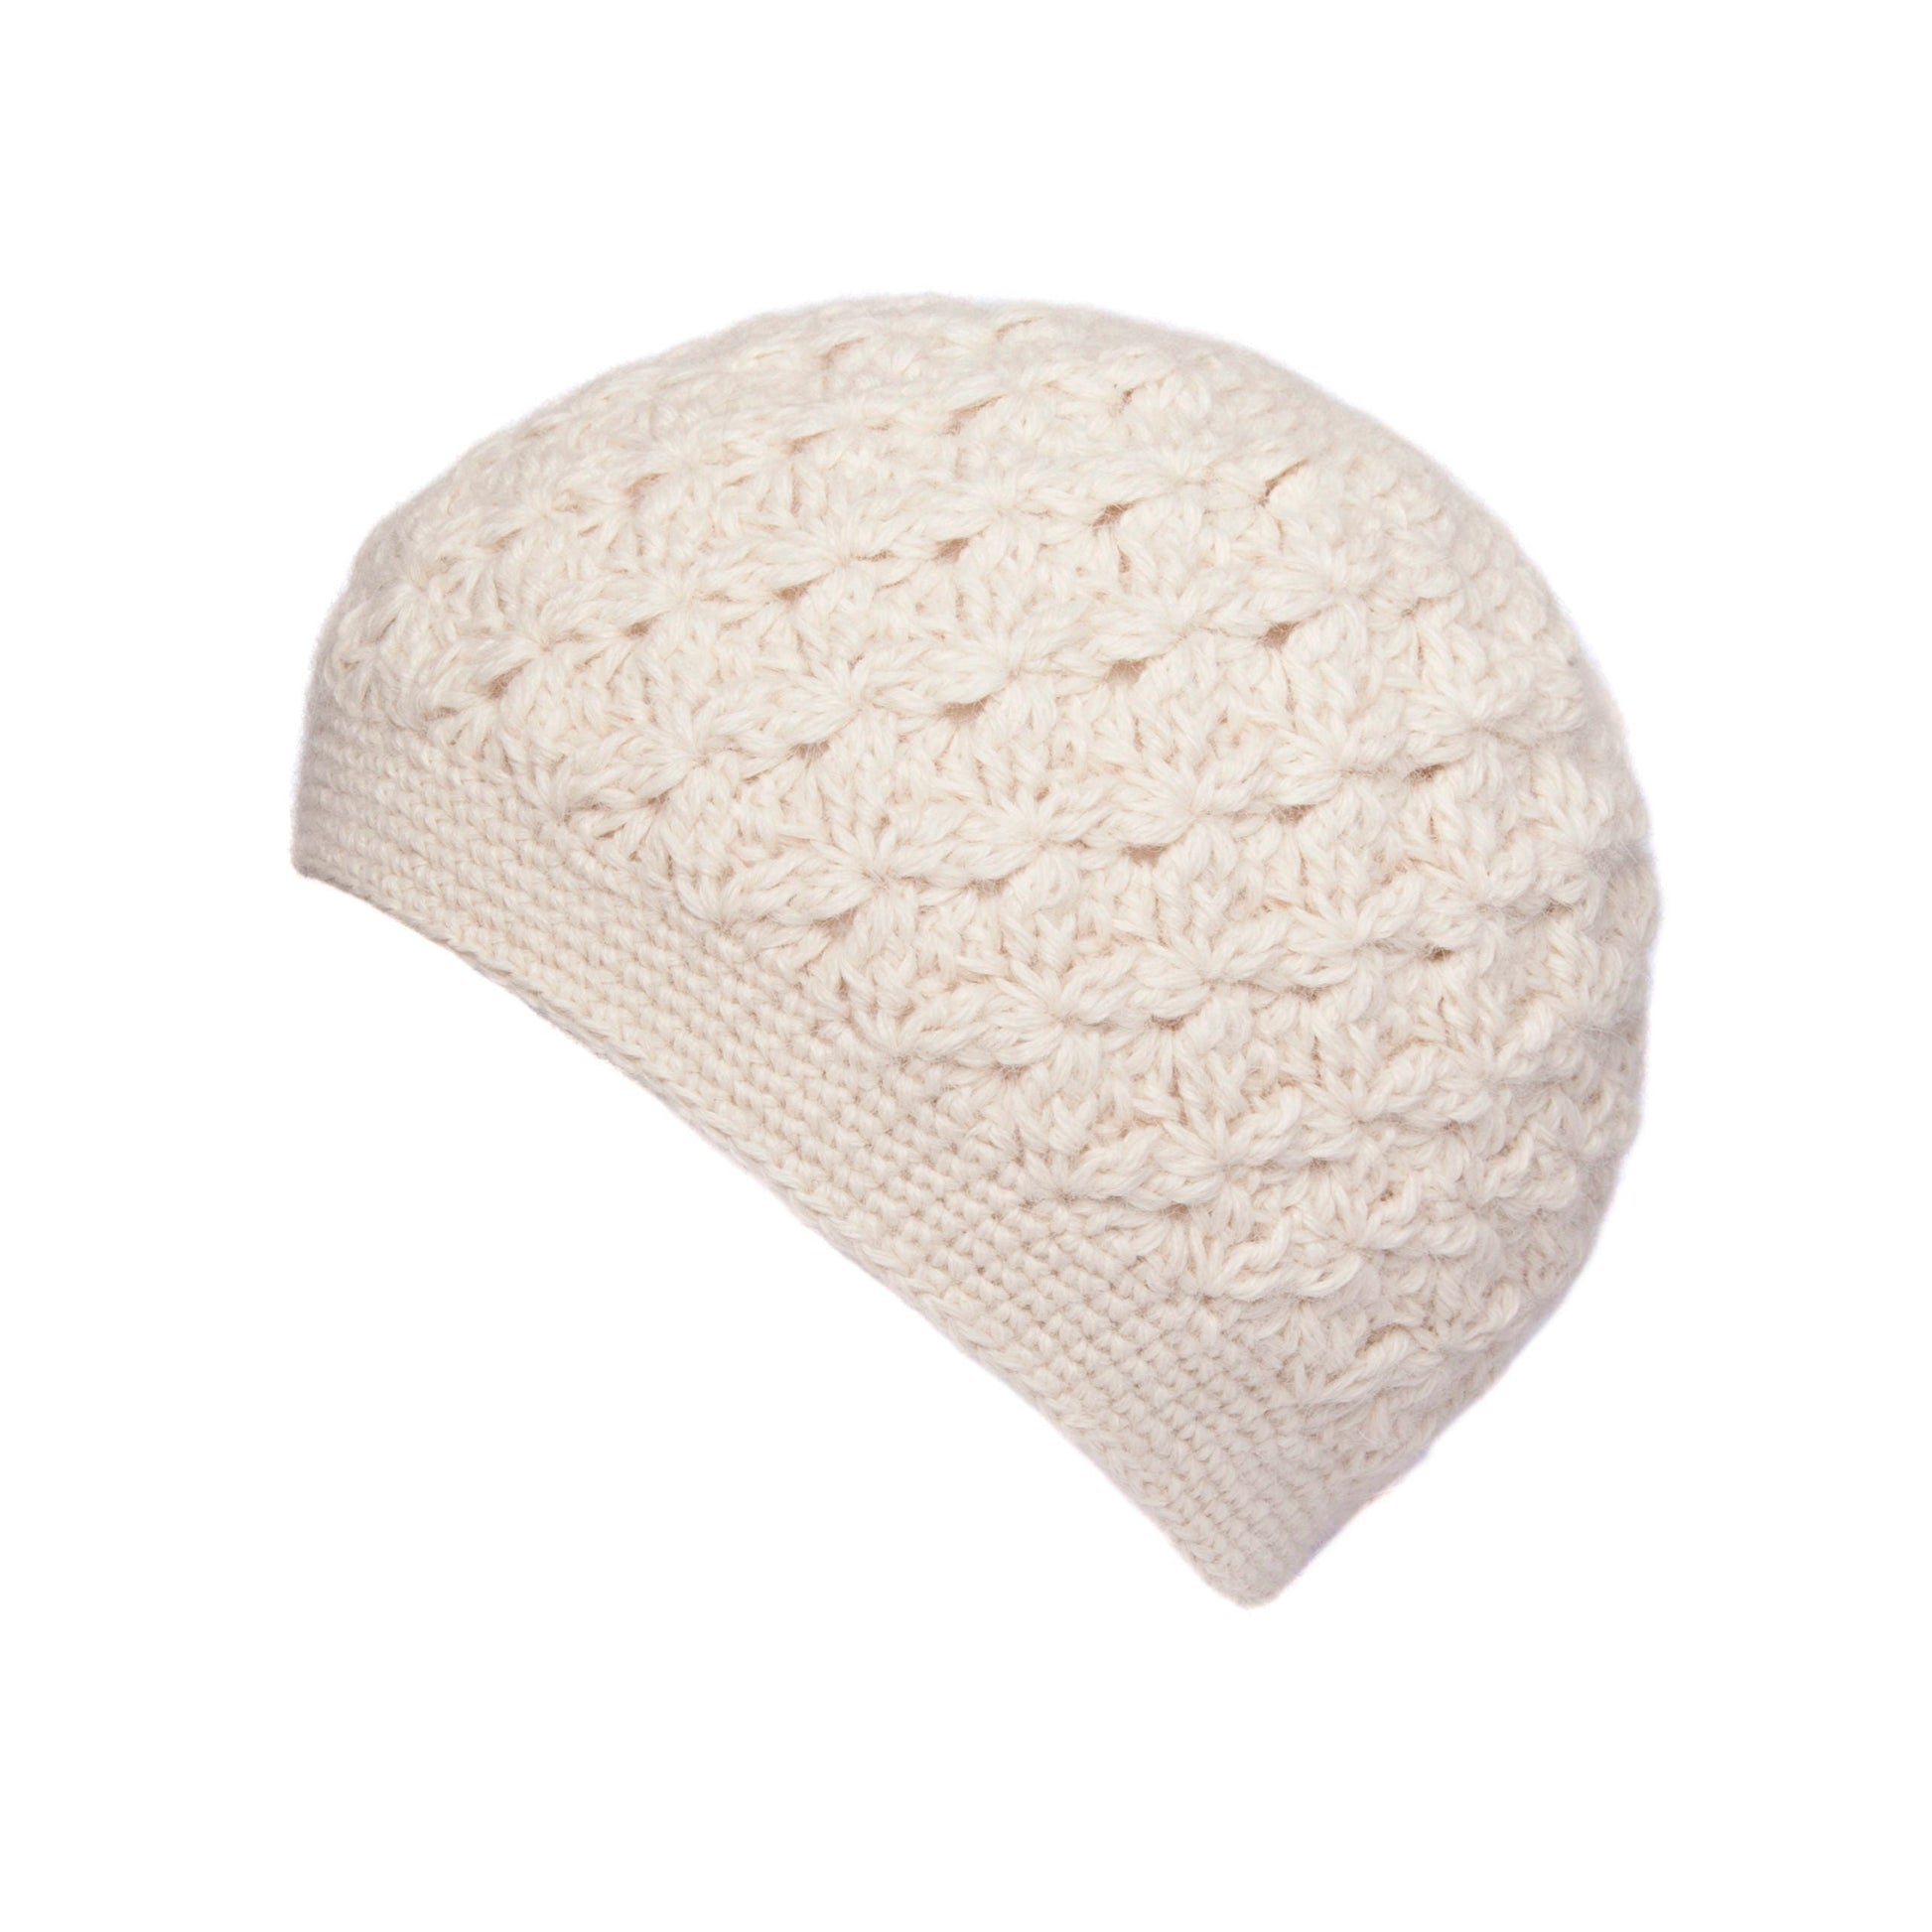 100% Alpaca Crochet Beanie Hat, Cream. Hand crocheted alpaca wool beret, knit tam, skullcap, Ethical, Soft, Warm, Natural fibre Plastic free